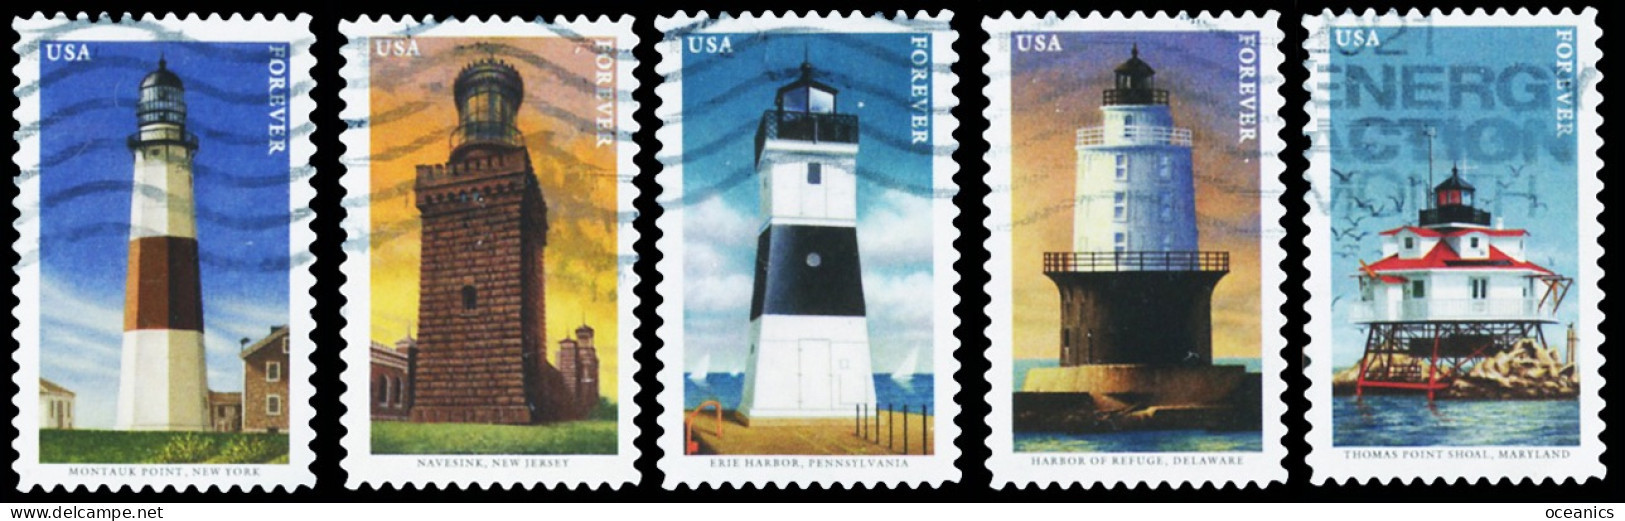 Etats-Unis / United States (Scott No.5621-25 - Mid-Atlantic Lighthouses) (o) Set Of 5 - Gebraucht